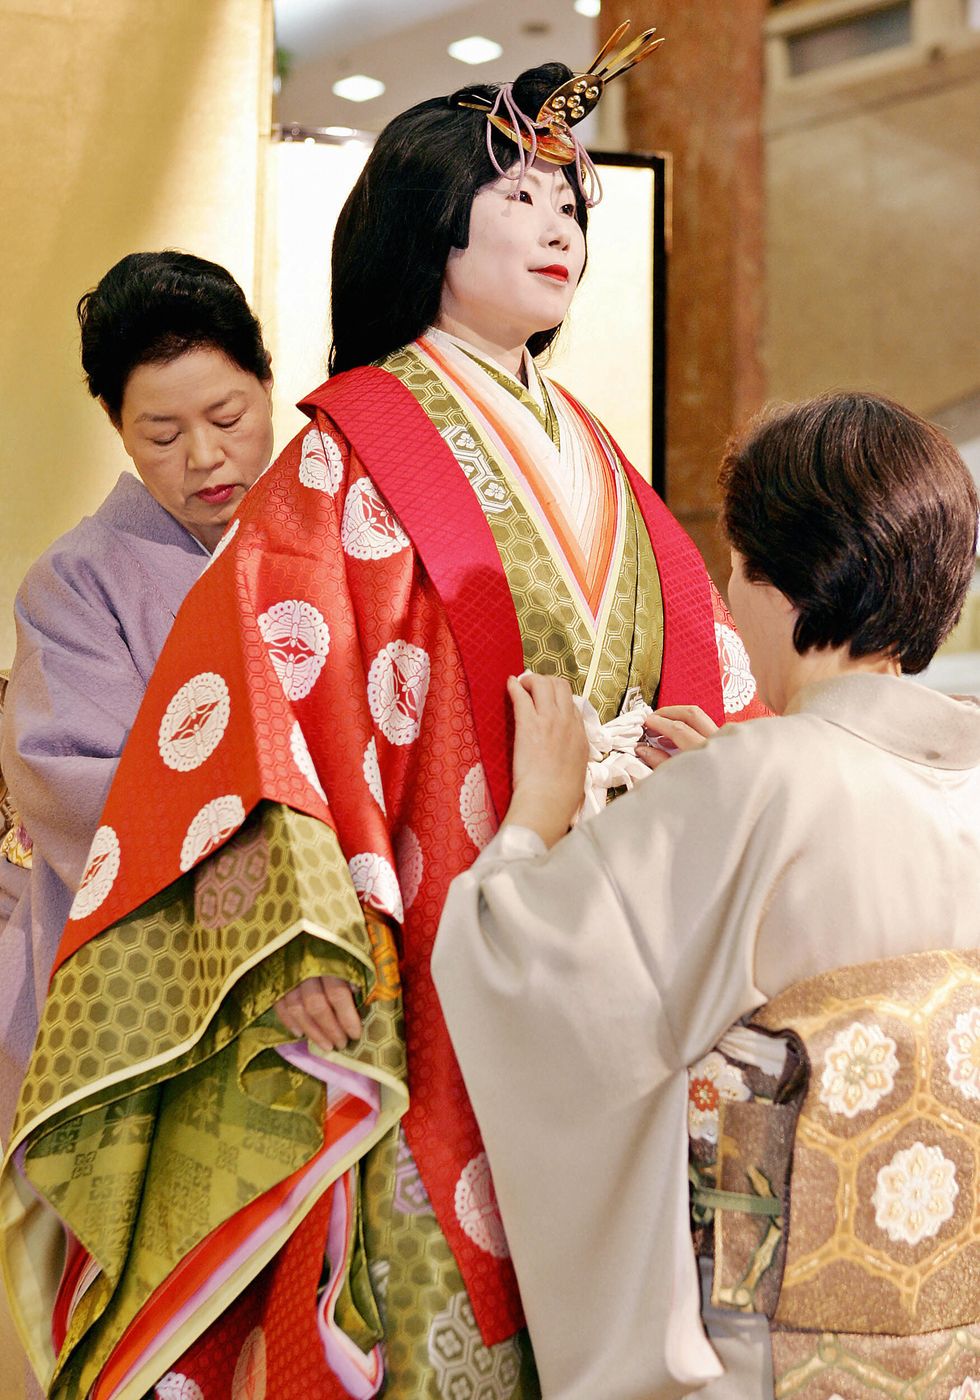 Kimono seamstresses put an ancient Japan